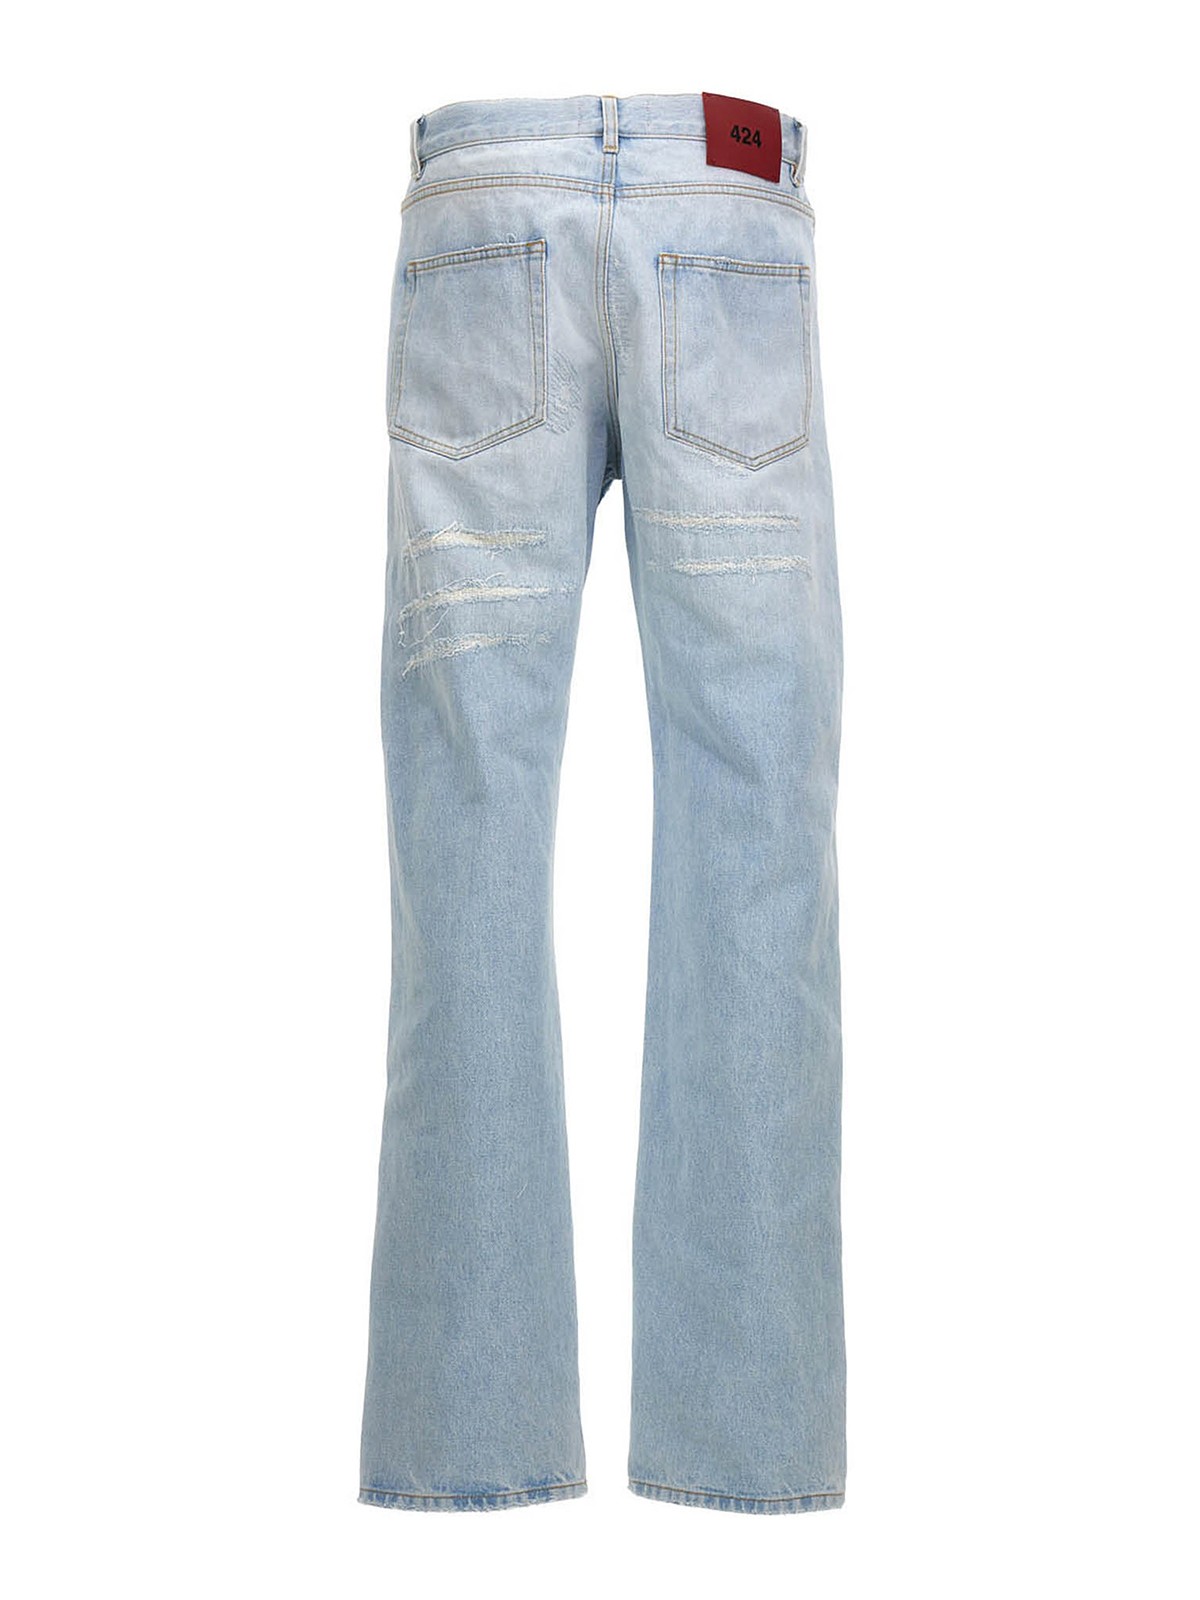 Shop 424 Baggy Jeans In Light Blue